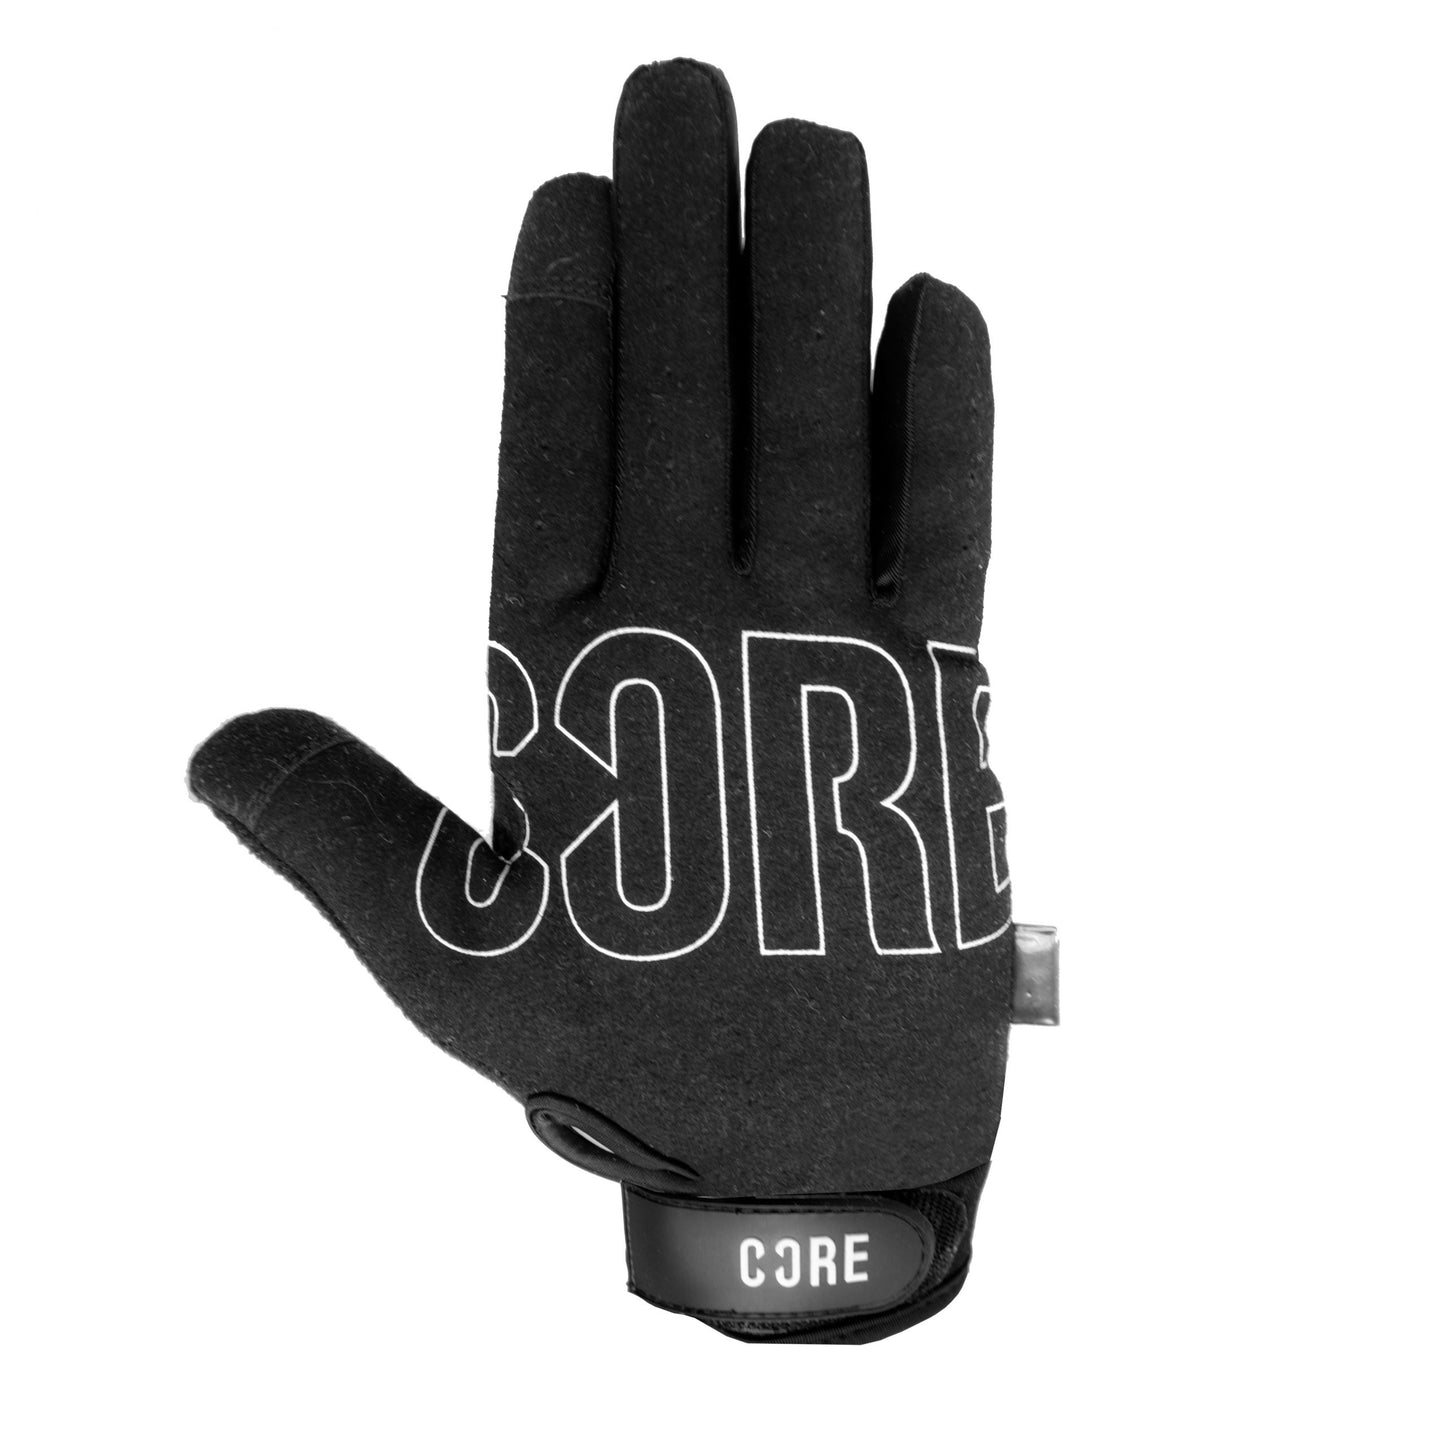 CORE Protection Gloves SR - Black - Prime Delux Store